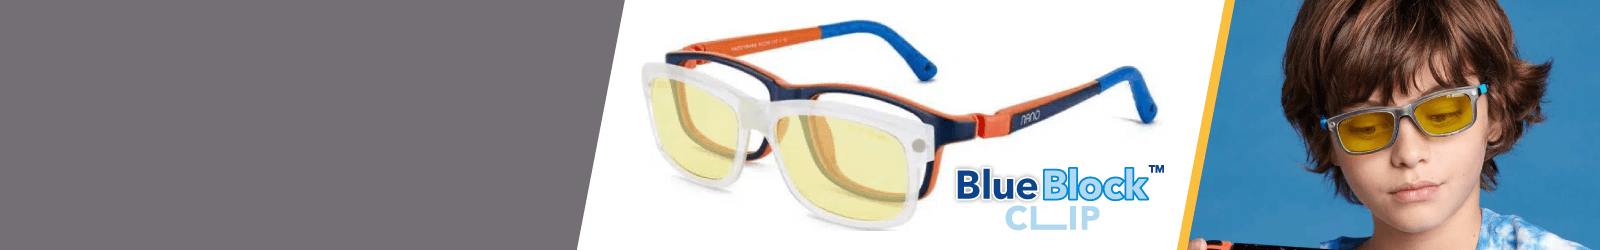 Nano Blue Block Clip Eyewear for Kids   for Boys